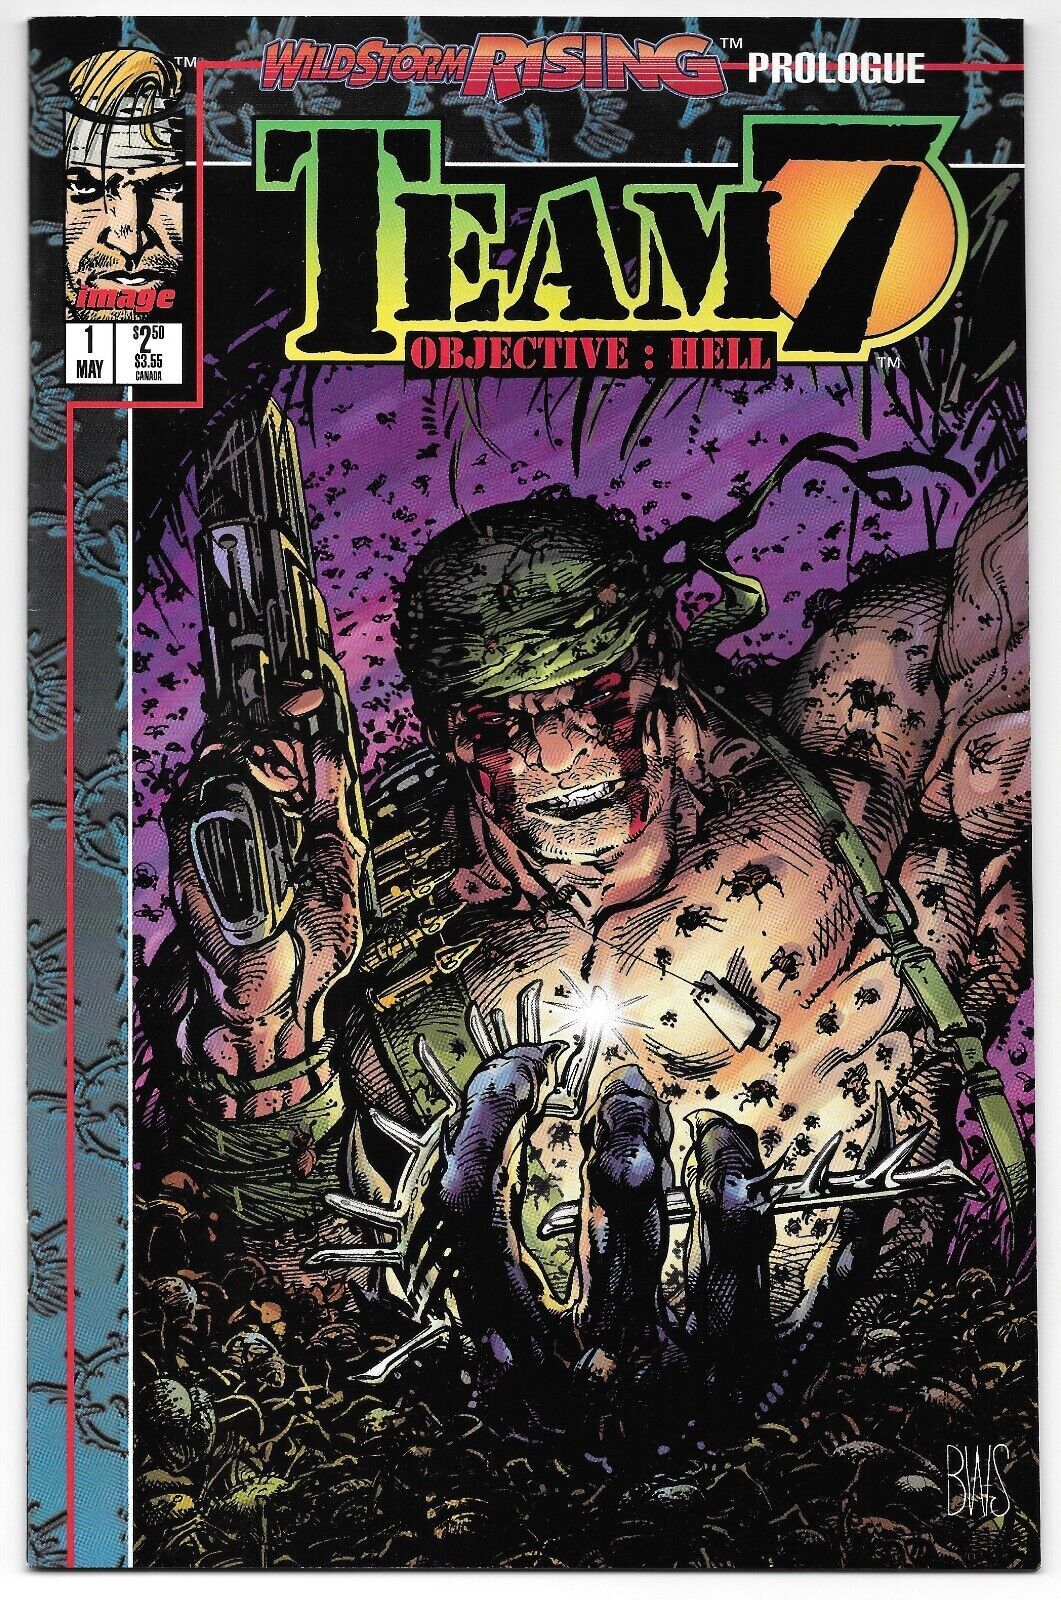 Team 7 Objective Hell 1 051995 Image Comics Wildstorm Rising Comic Books Modern Age 4729